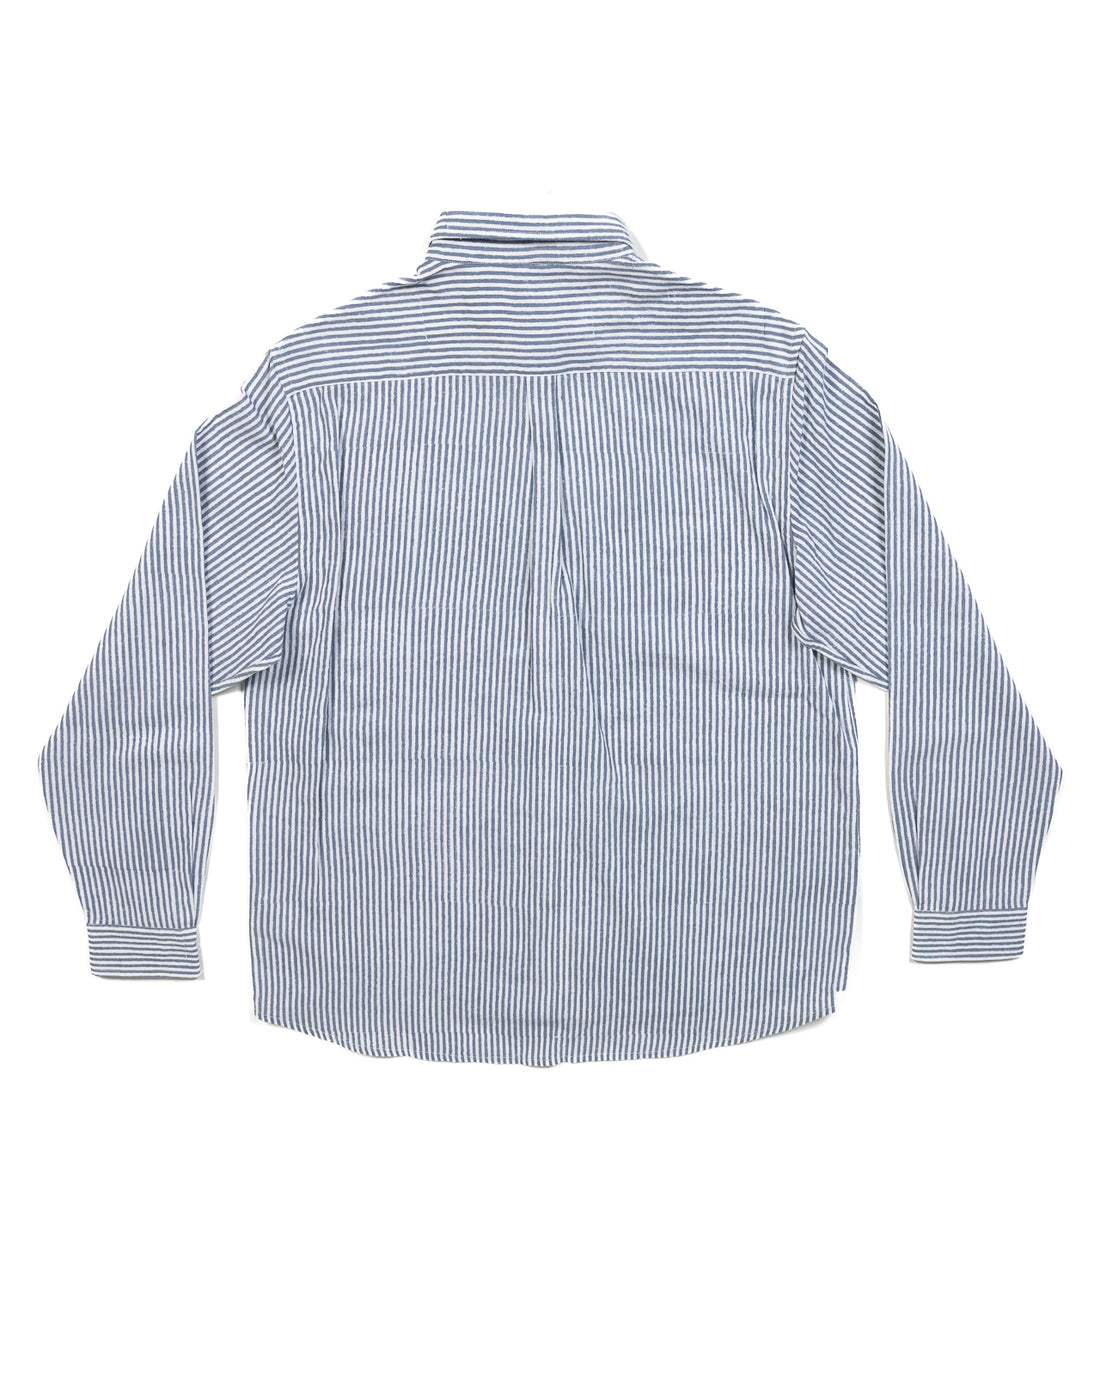 Indi + Ash Matty L/S Shirt - Handwoven Oxford Block Stripe Indigo Bengal - Standard & Strange